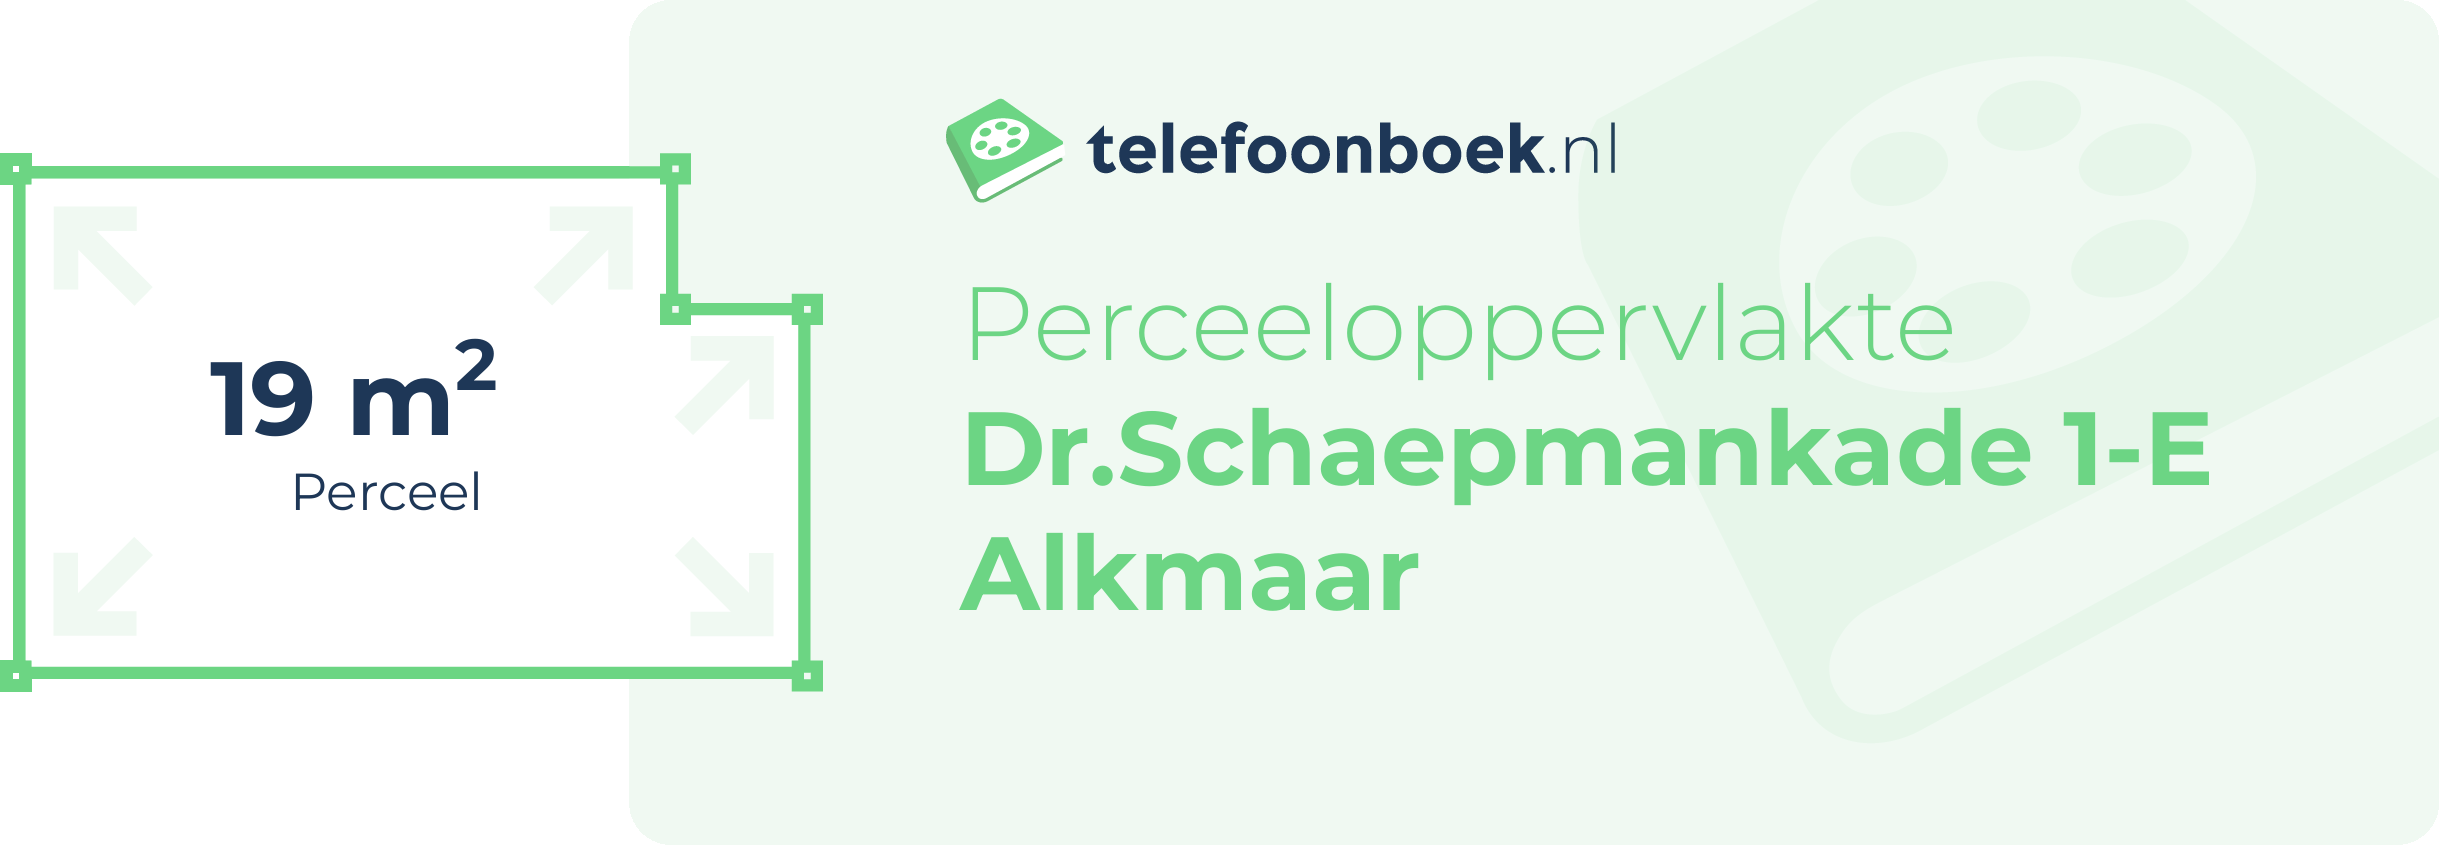 Perceeloppervlakte Dr.Schaepmankade 1-E Alkmaar